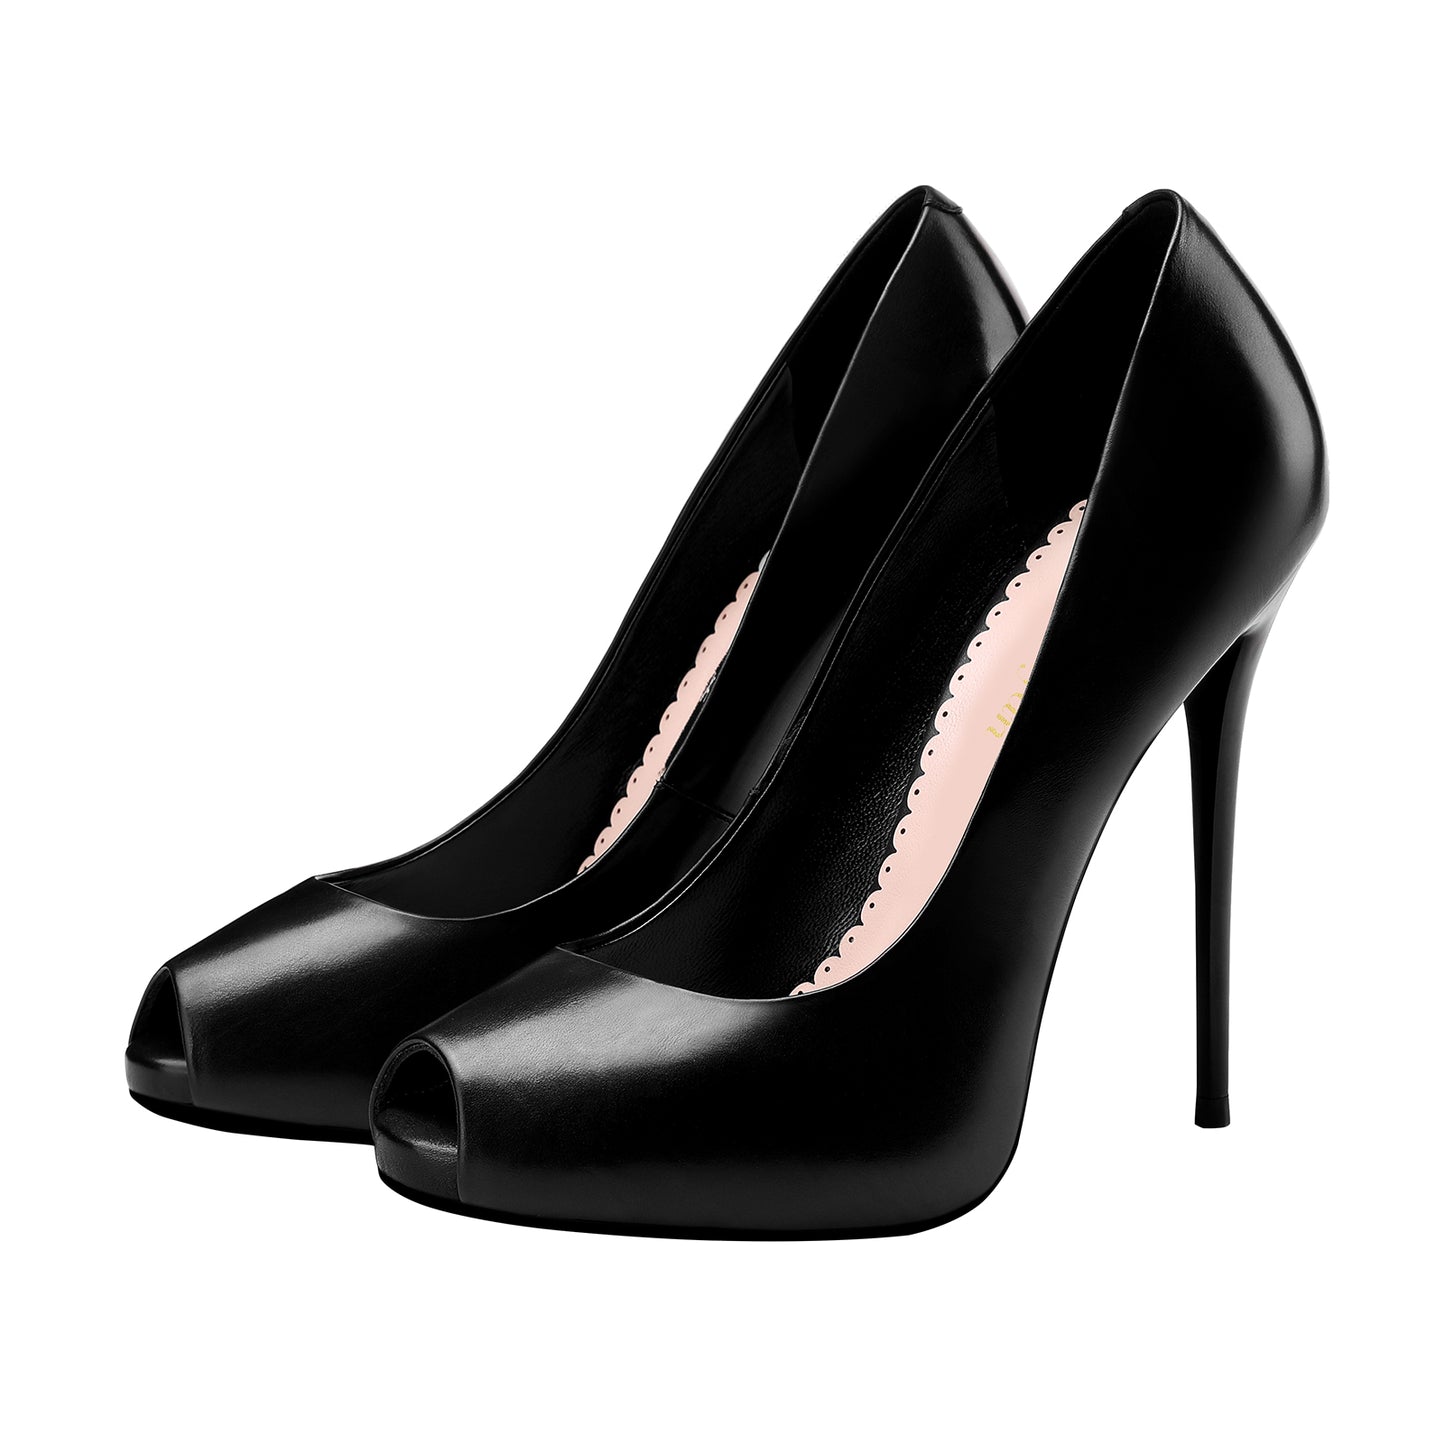 Comfortable & Classy Peep Toe Platform High Heel Stiletto Pumps for Women - Dressy Leather Heels